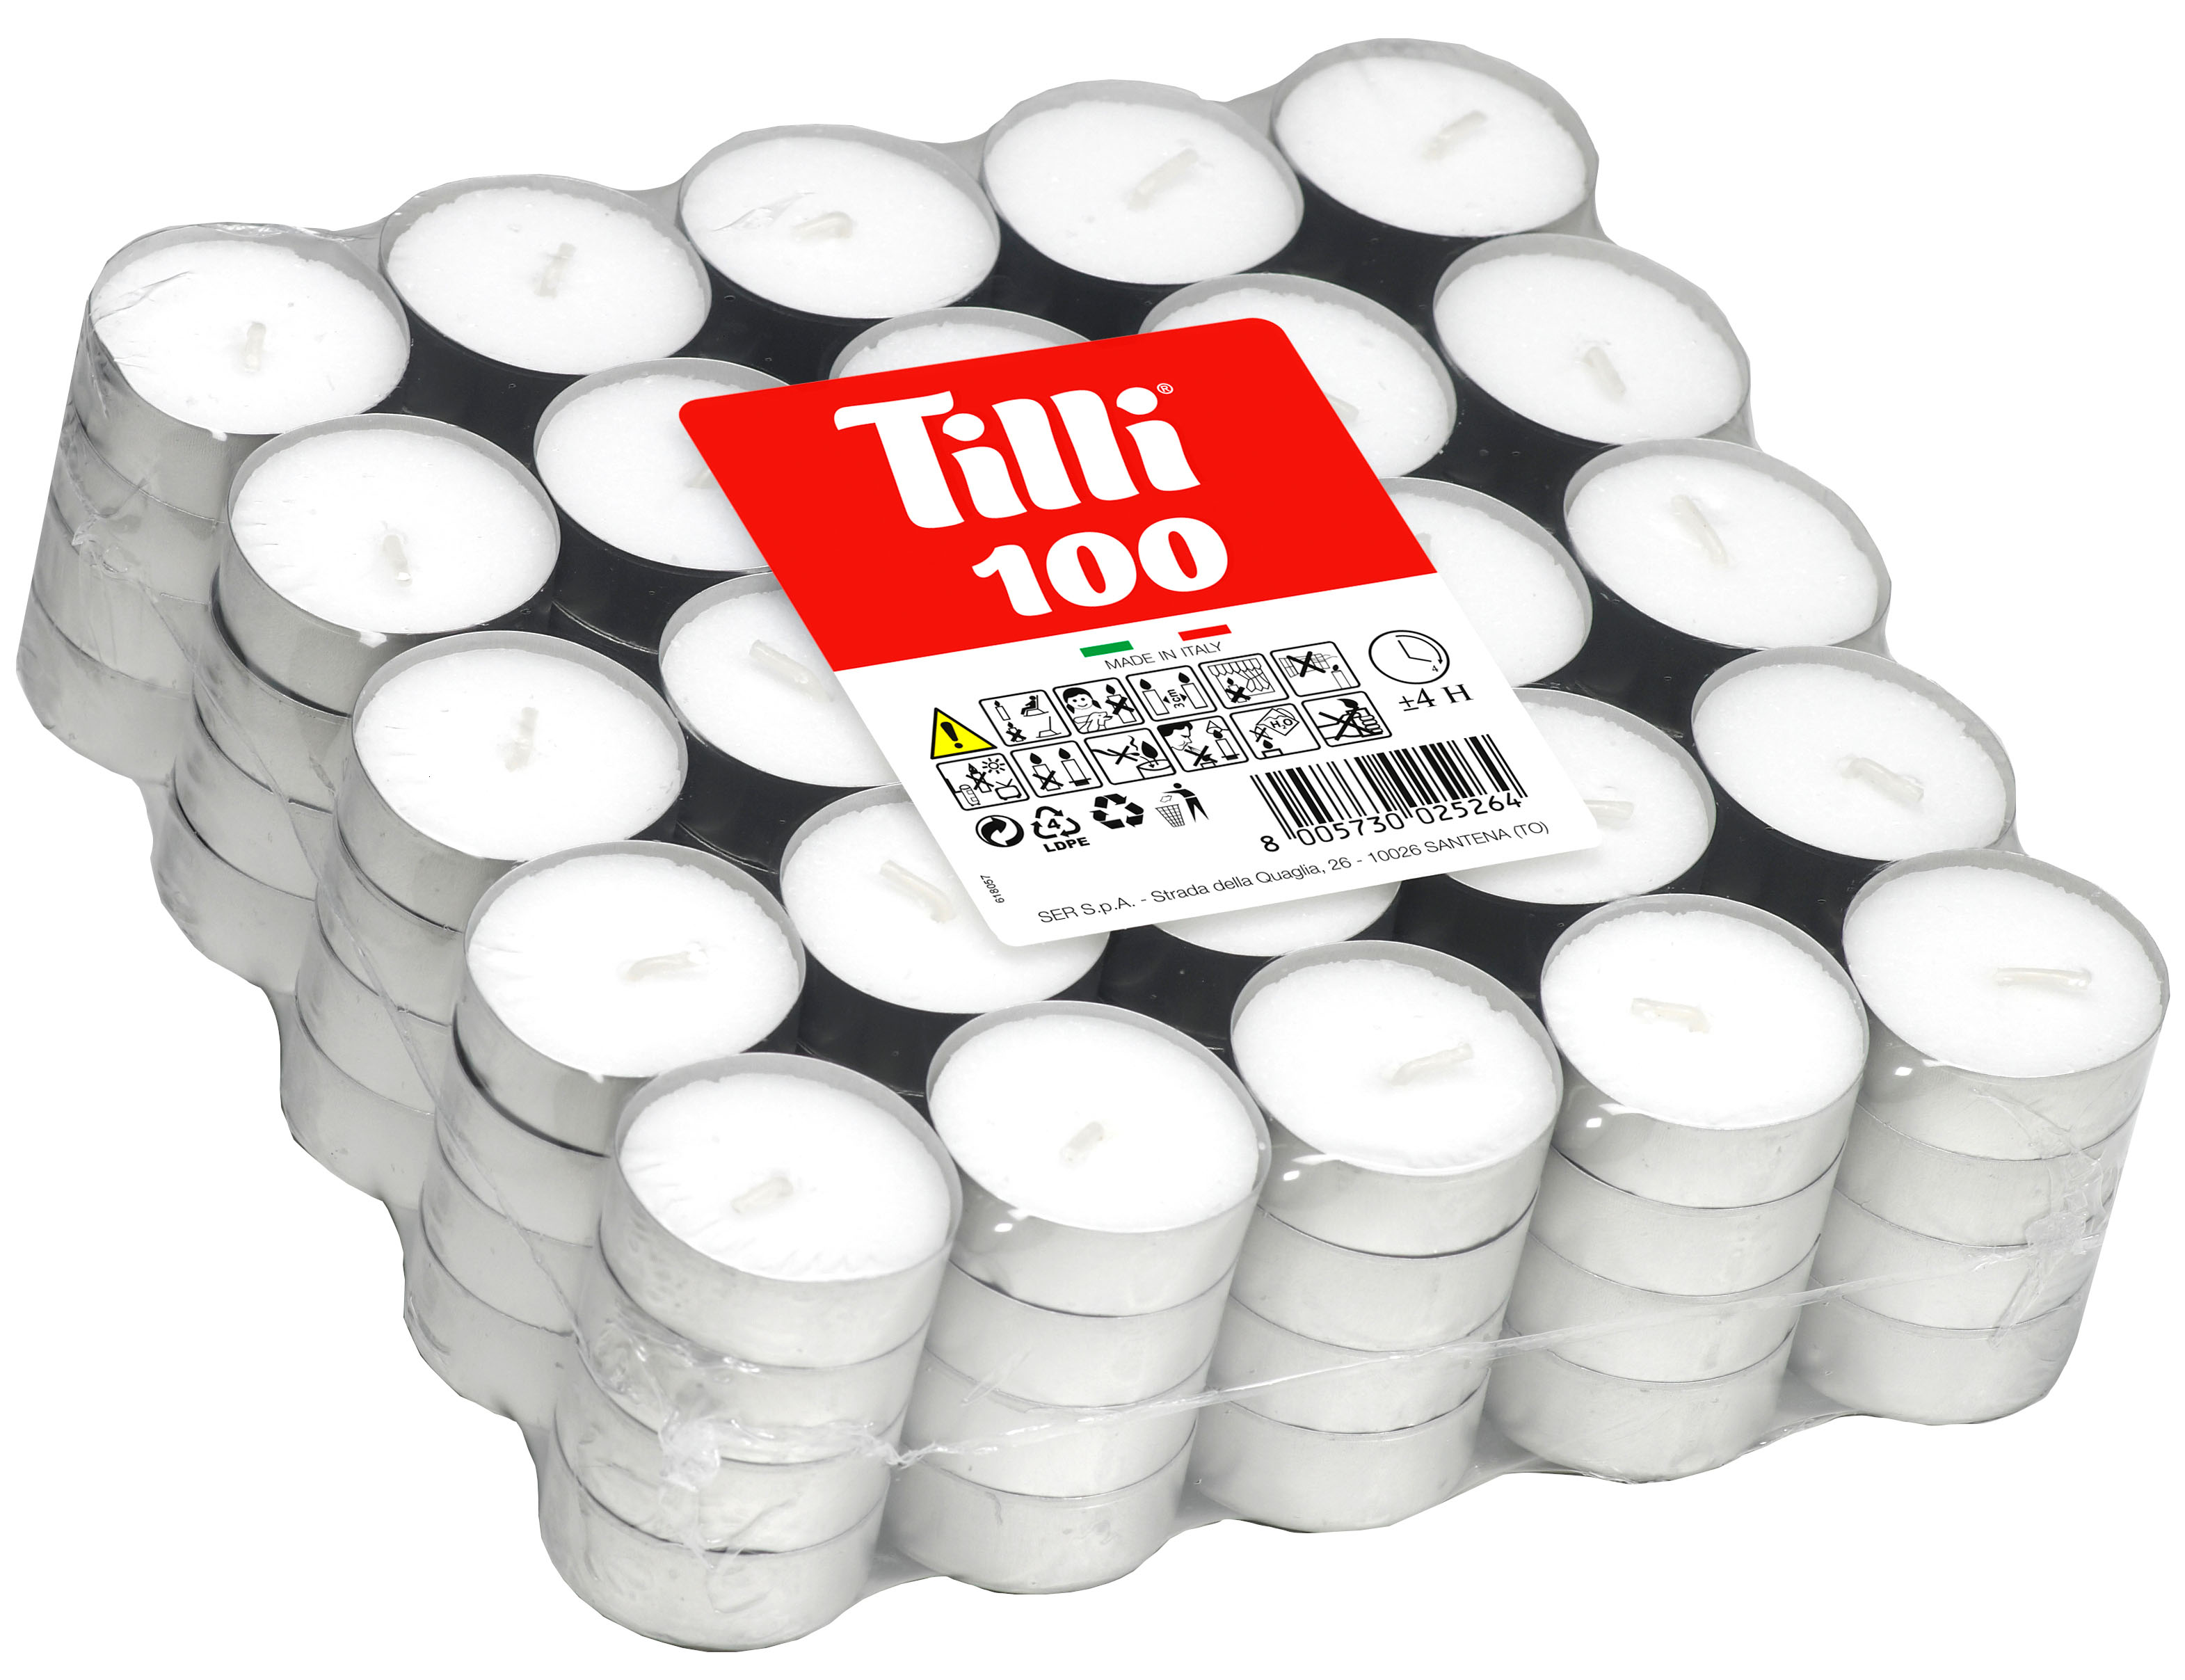 00142 - tea lights pack of 100